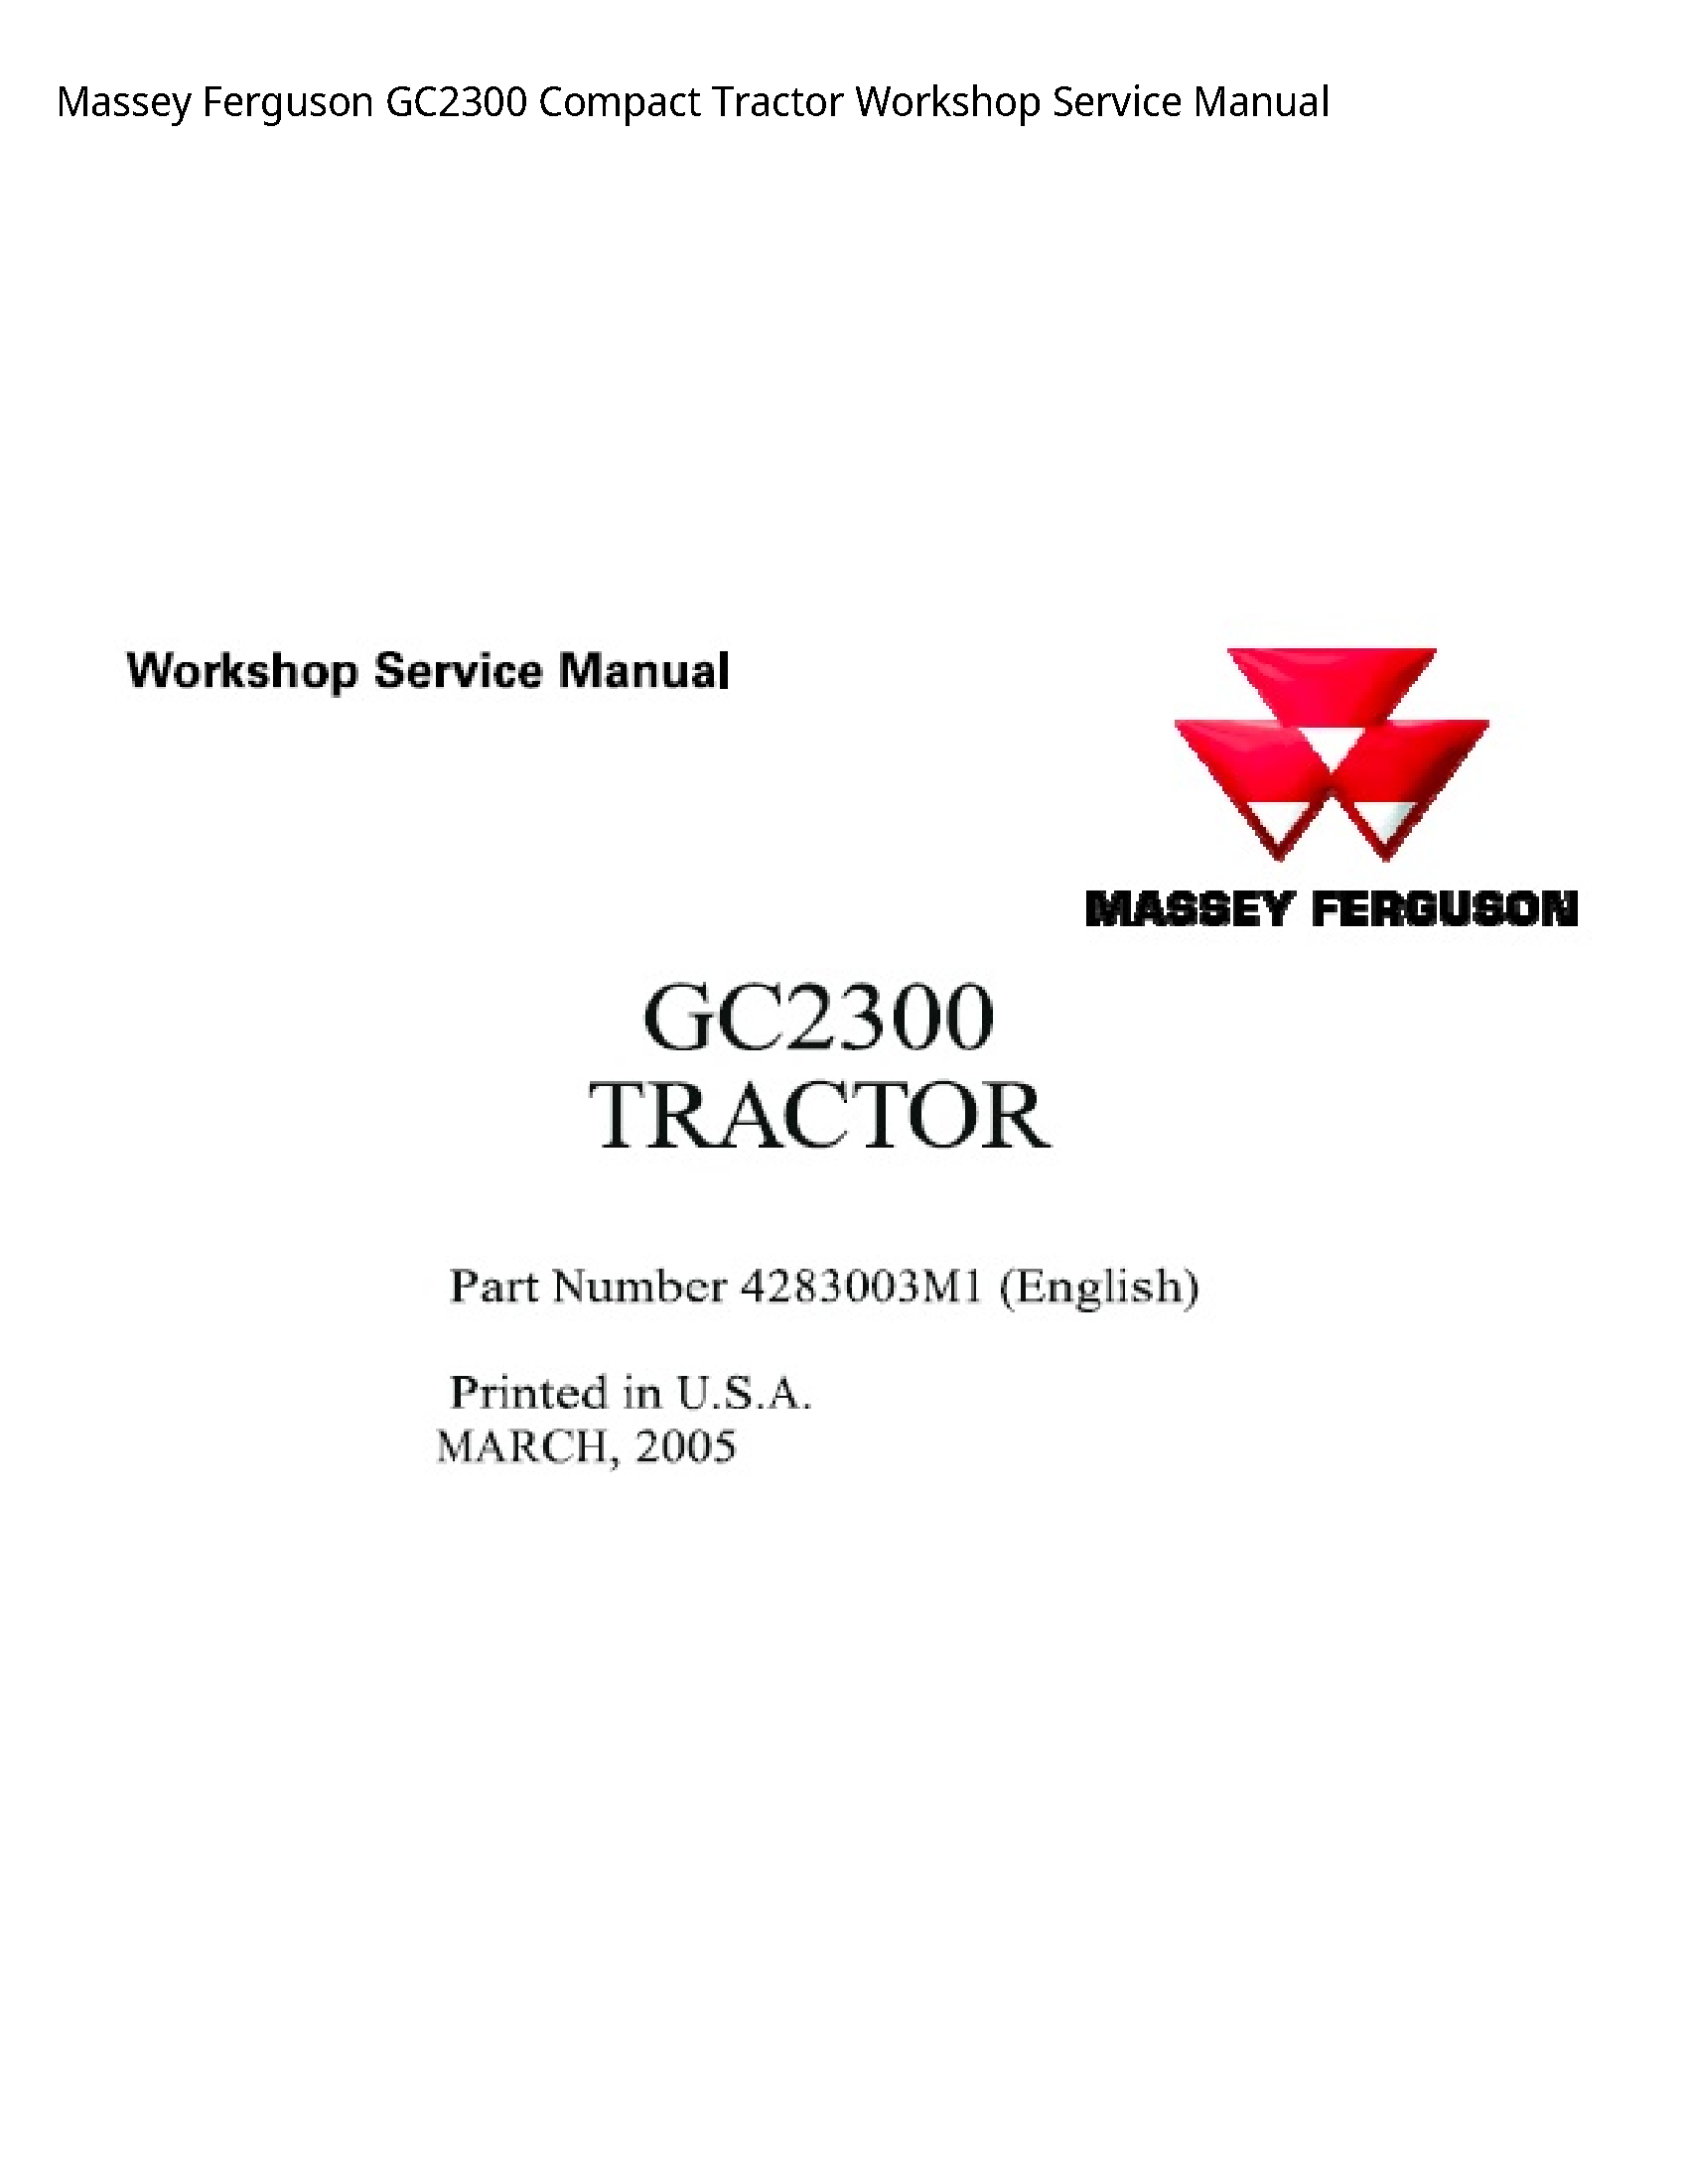 Massey Ferguson GC2300 Compact Tractor Service manual